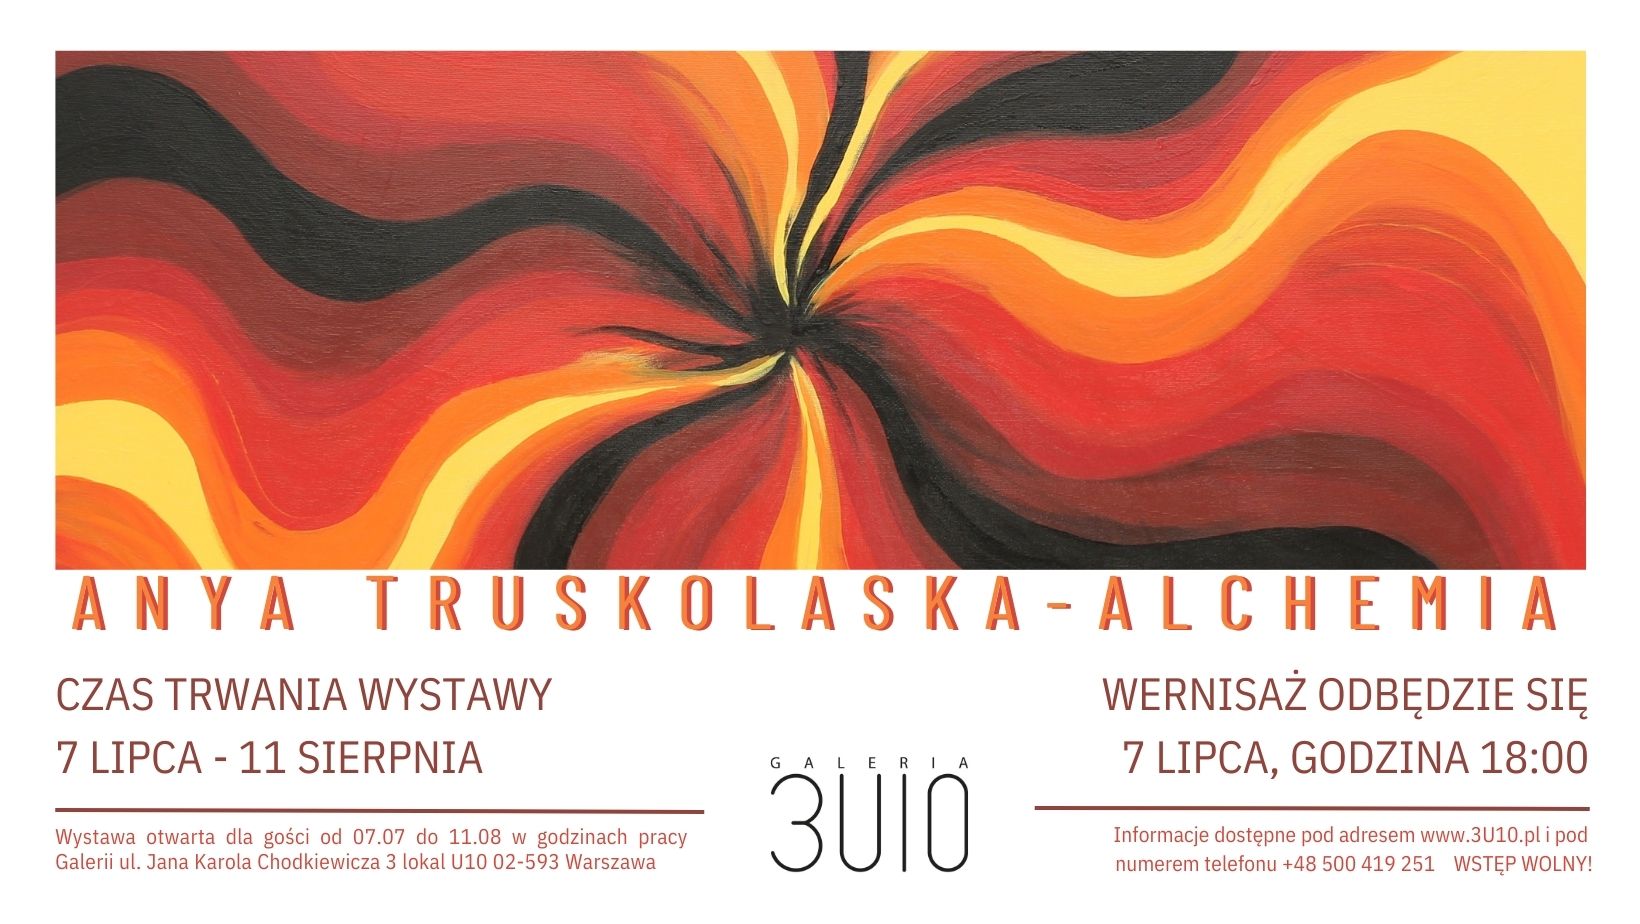 “ALCHEMIA” – Anya Truskolaska, wystawa malarstwa w galerii 3u10